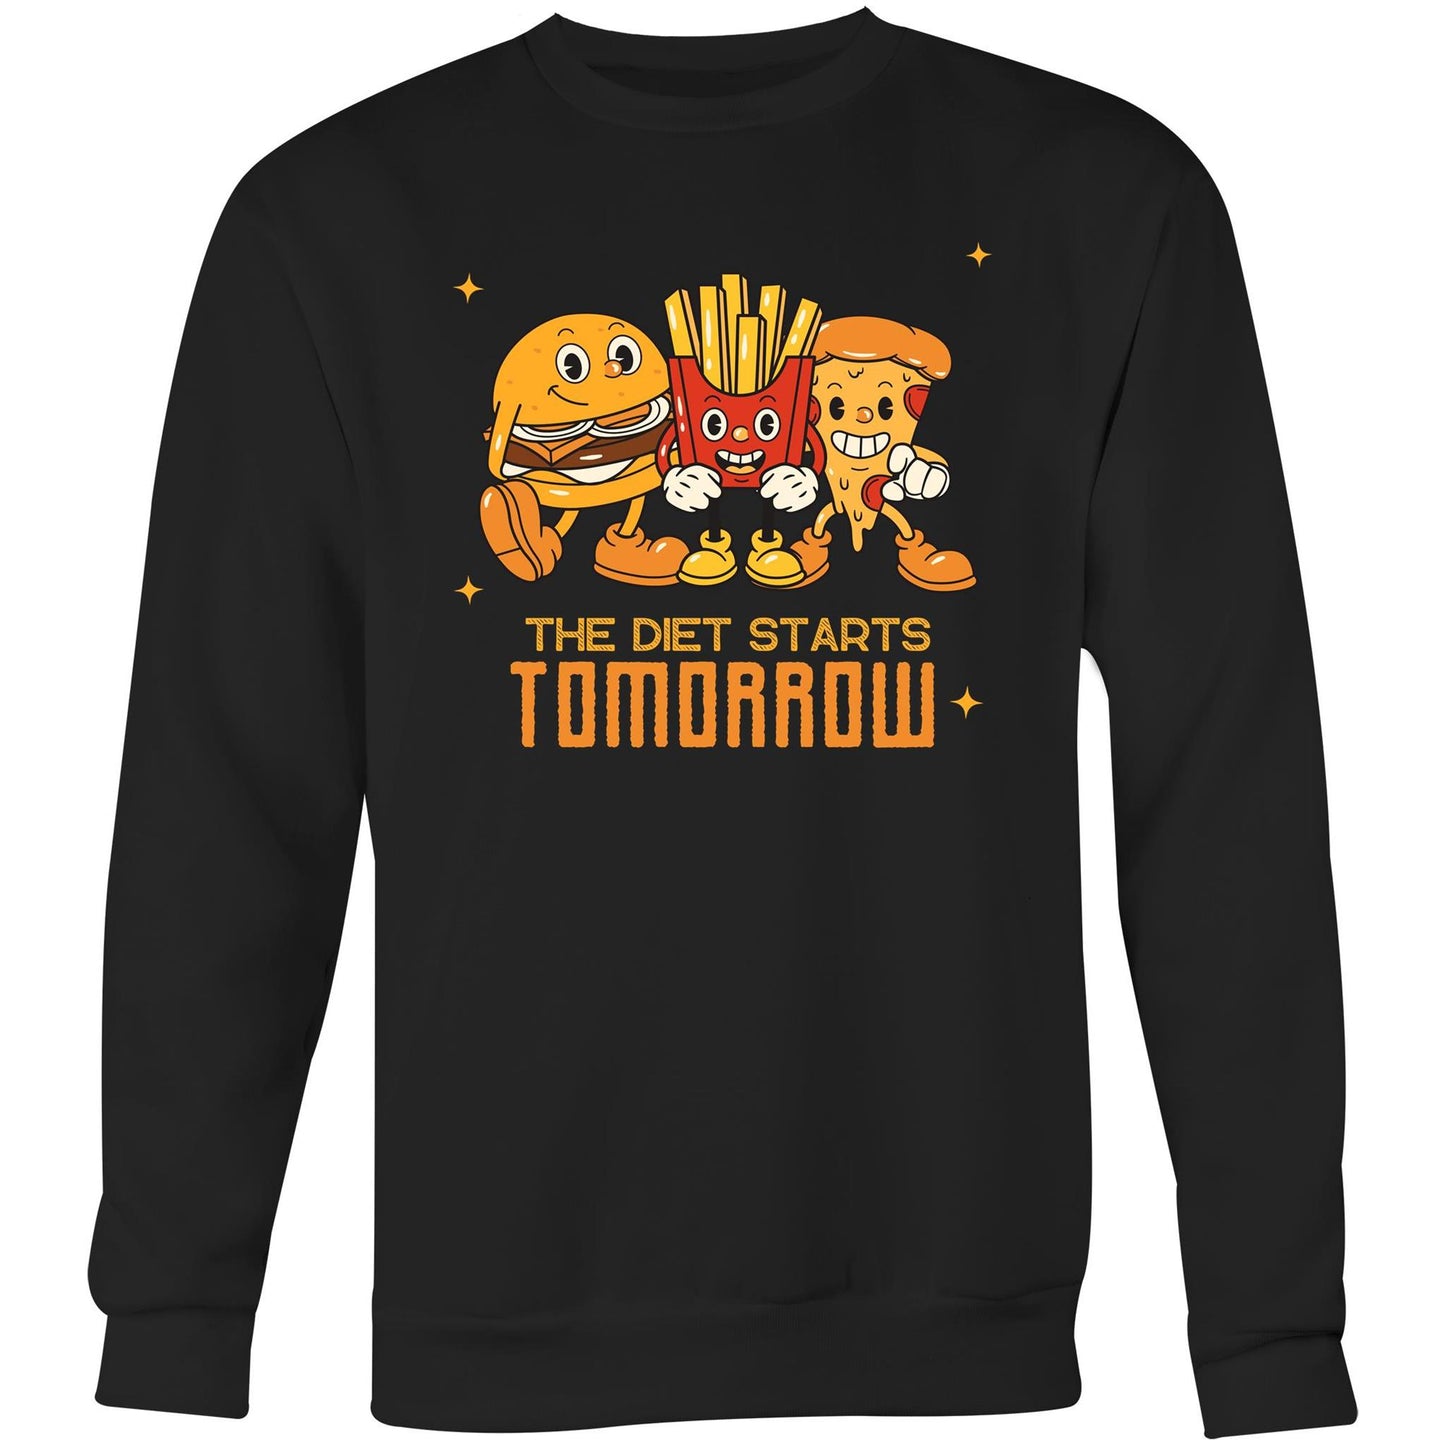 The Diet Starts Tomorrow, Hamburger, Pizza, Fries - Crew Sweatshirt Black Sweatshirt Food Funny Retro